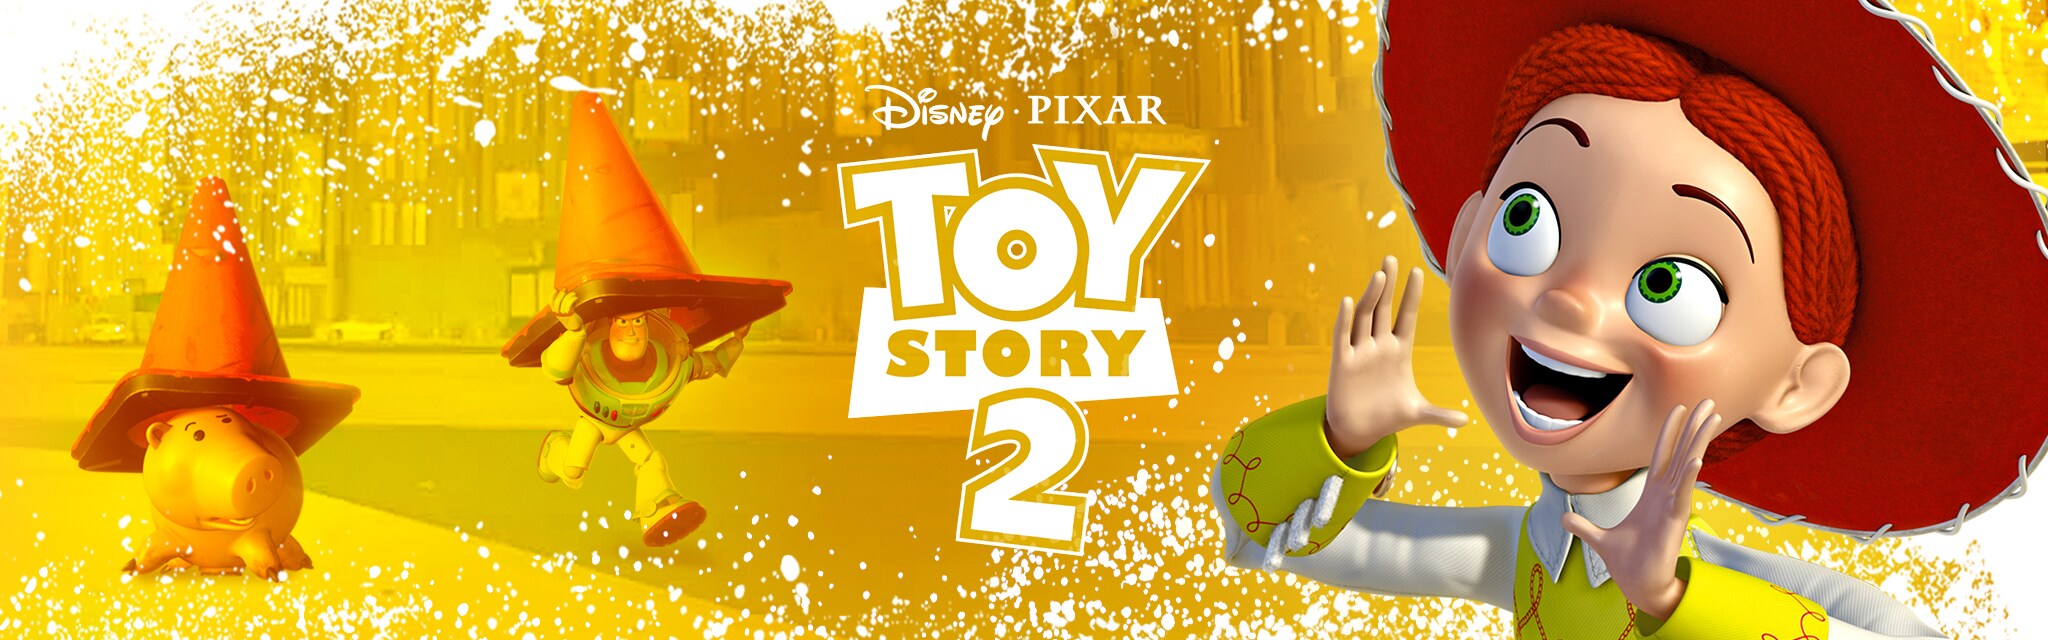 Disney Pixar - Toy Story 2